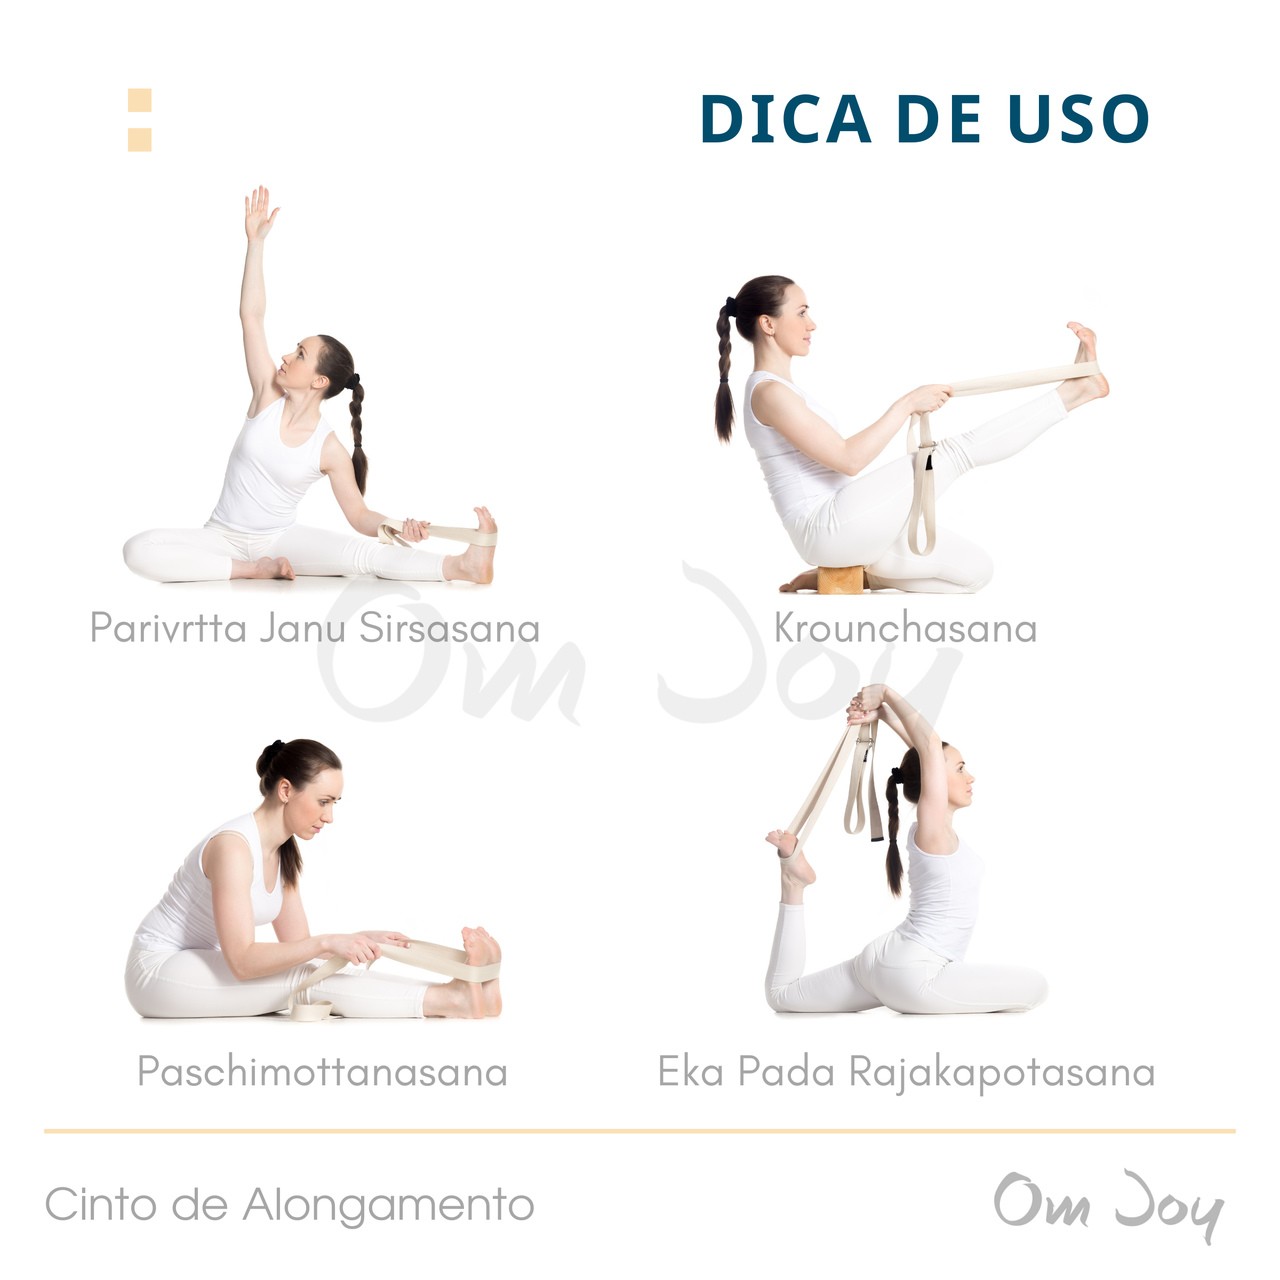 Cinto / Faixa para Alongamento - Yoga Strap - Cor Lisa (200 cm) - Om Joy